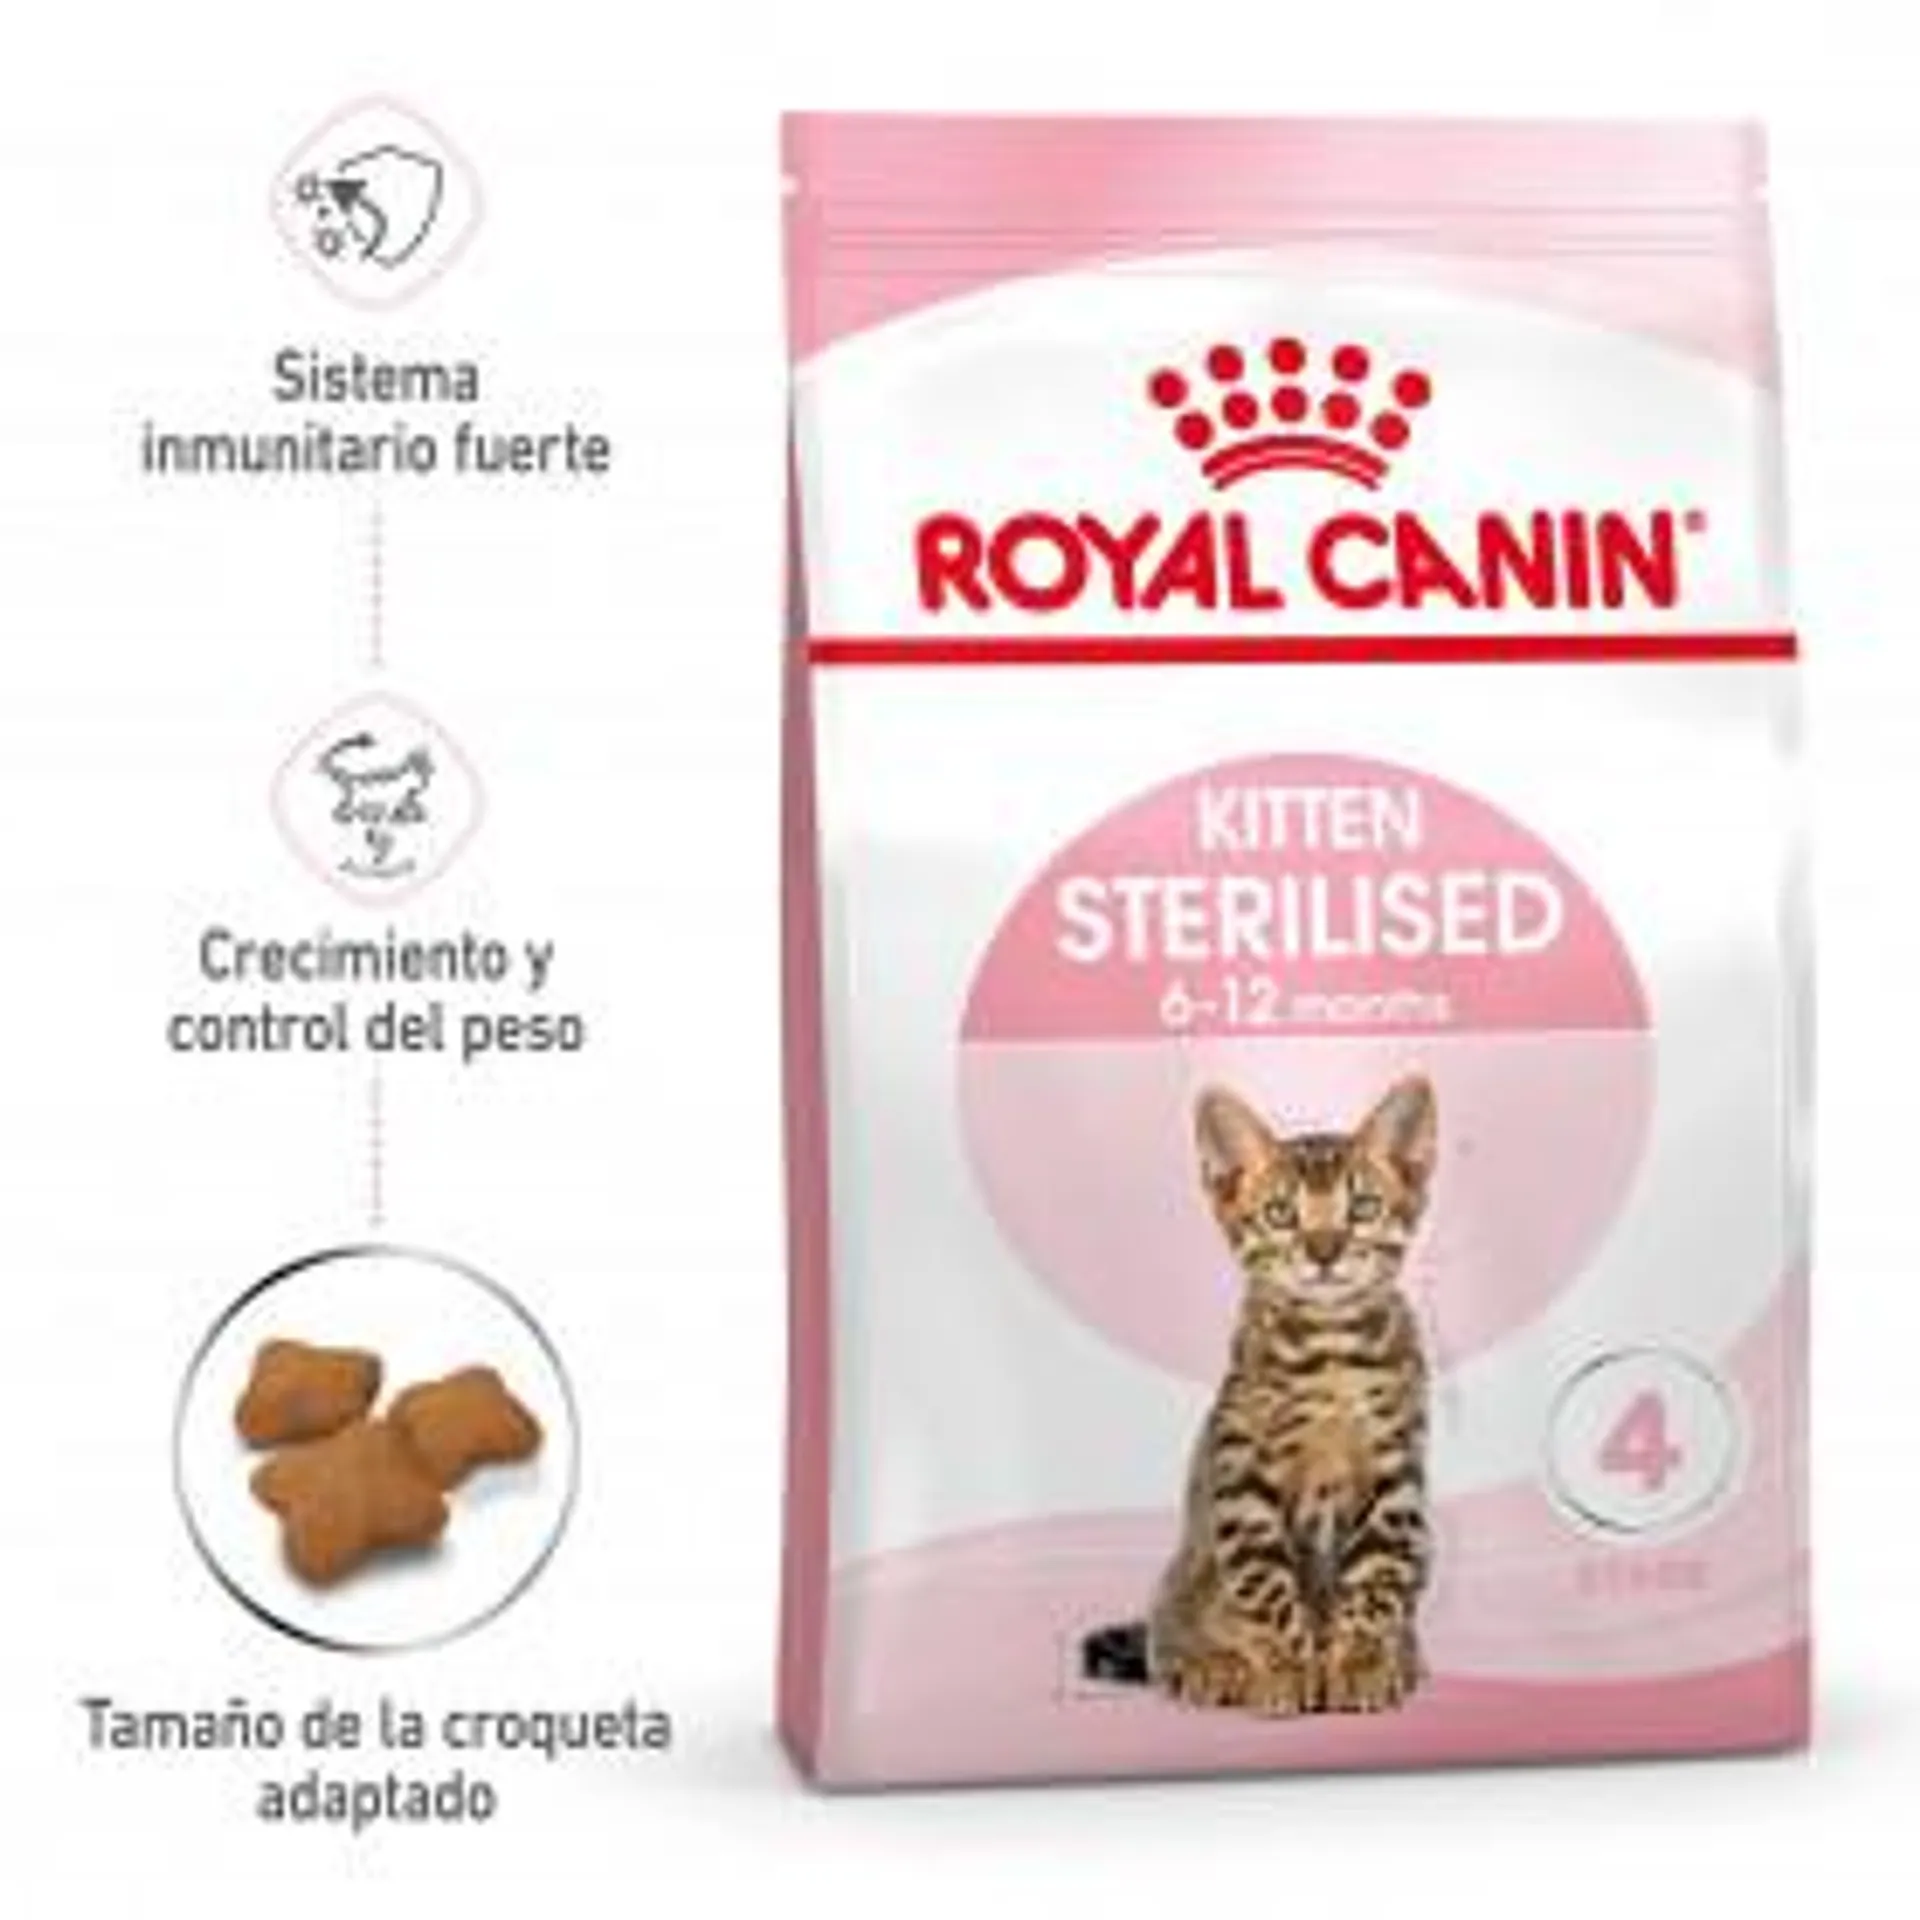 Royal Canin Kitten Sterilised pienso para gatitos esterilizados